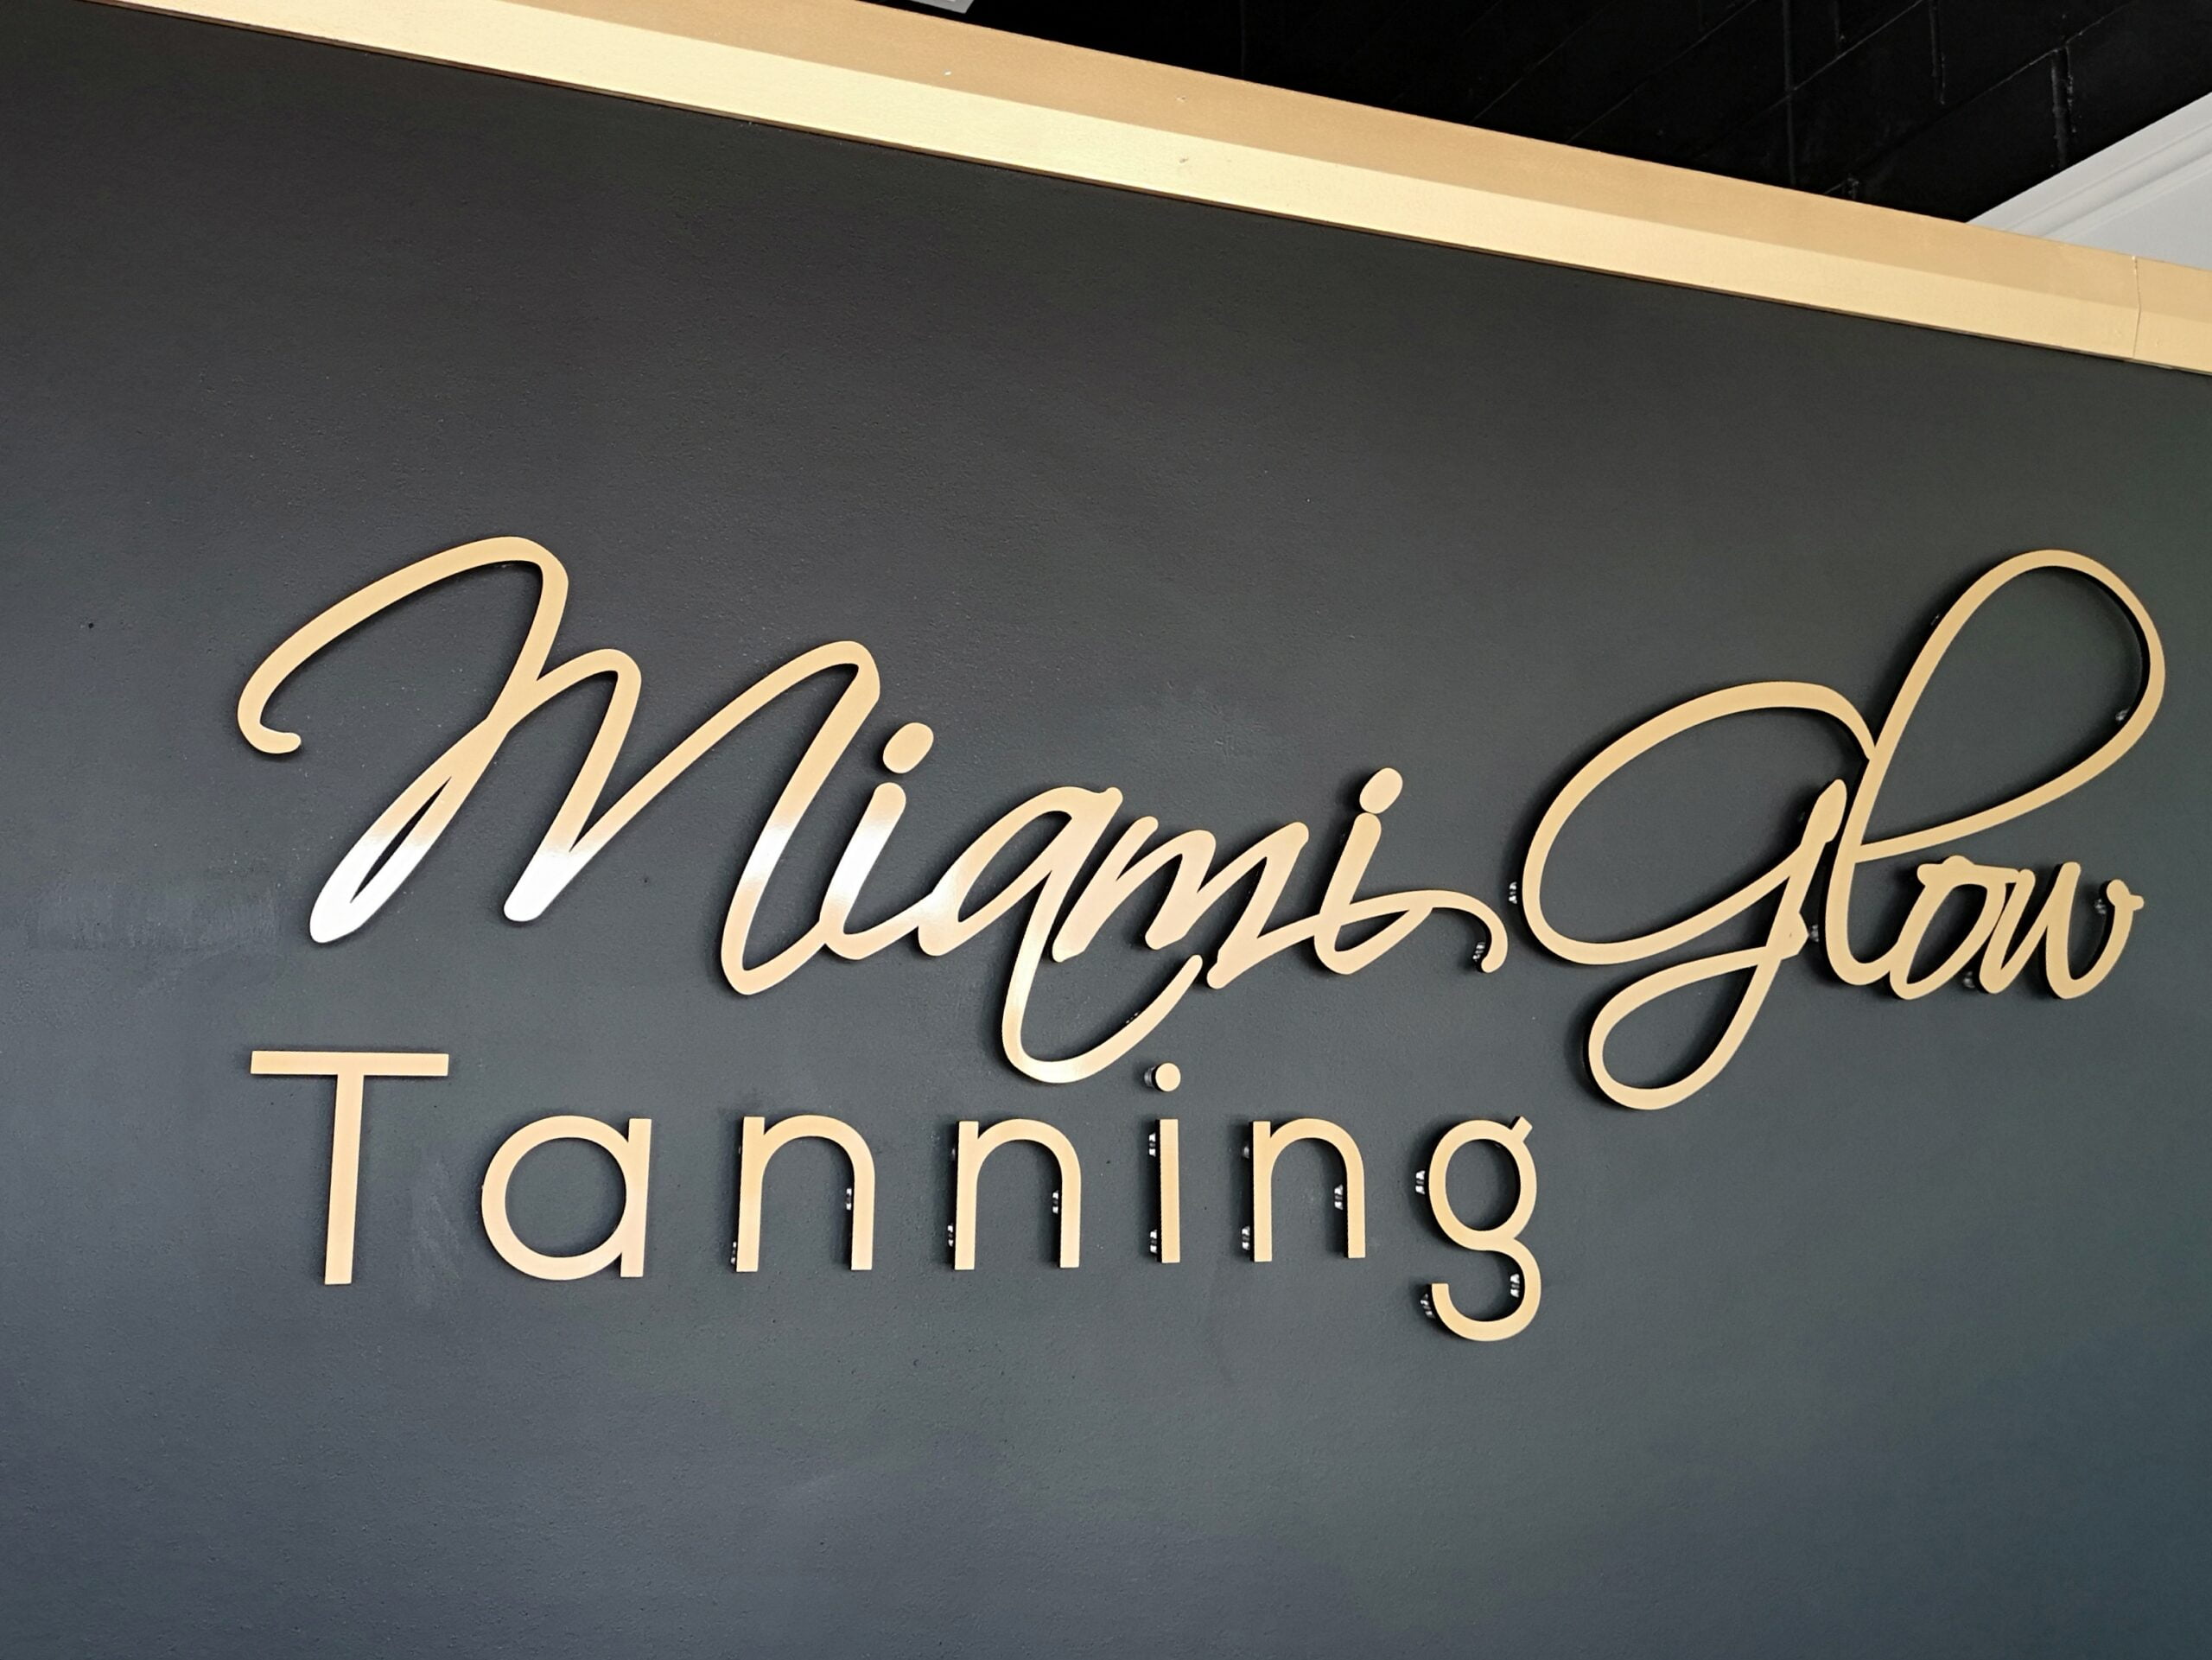 Miami Glow Tanning Spa